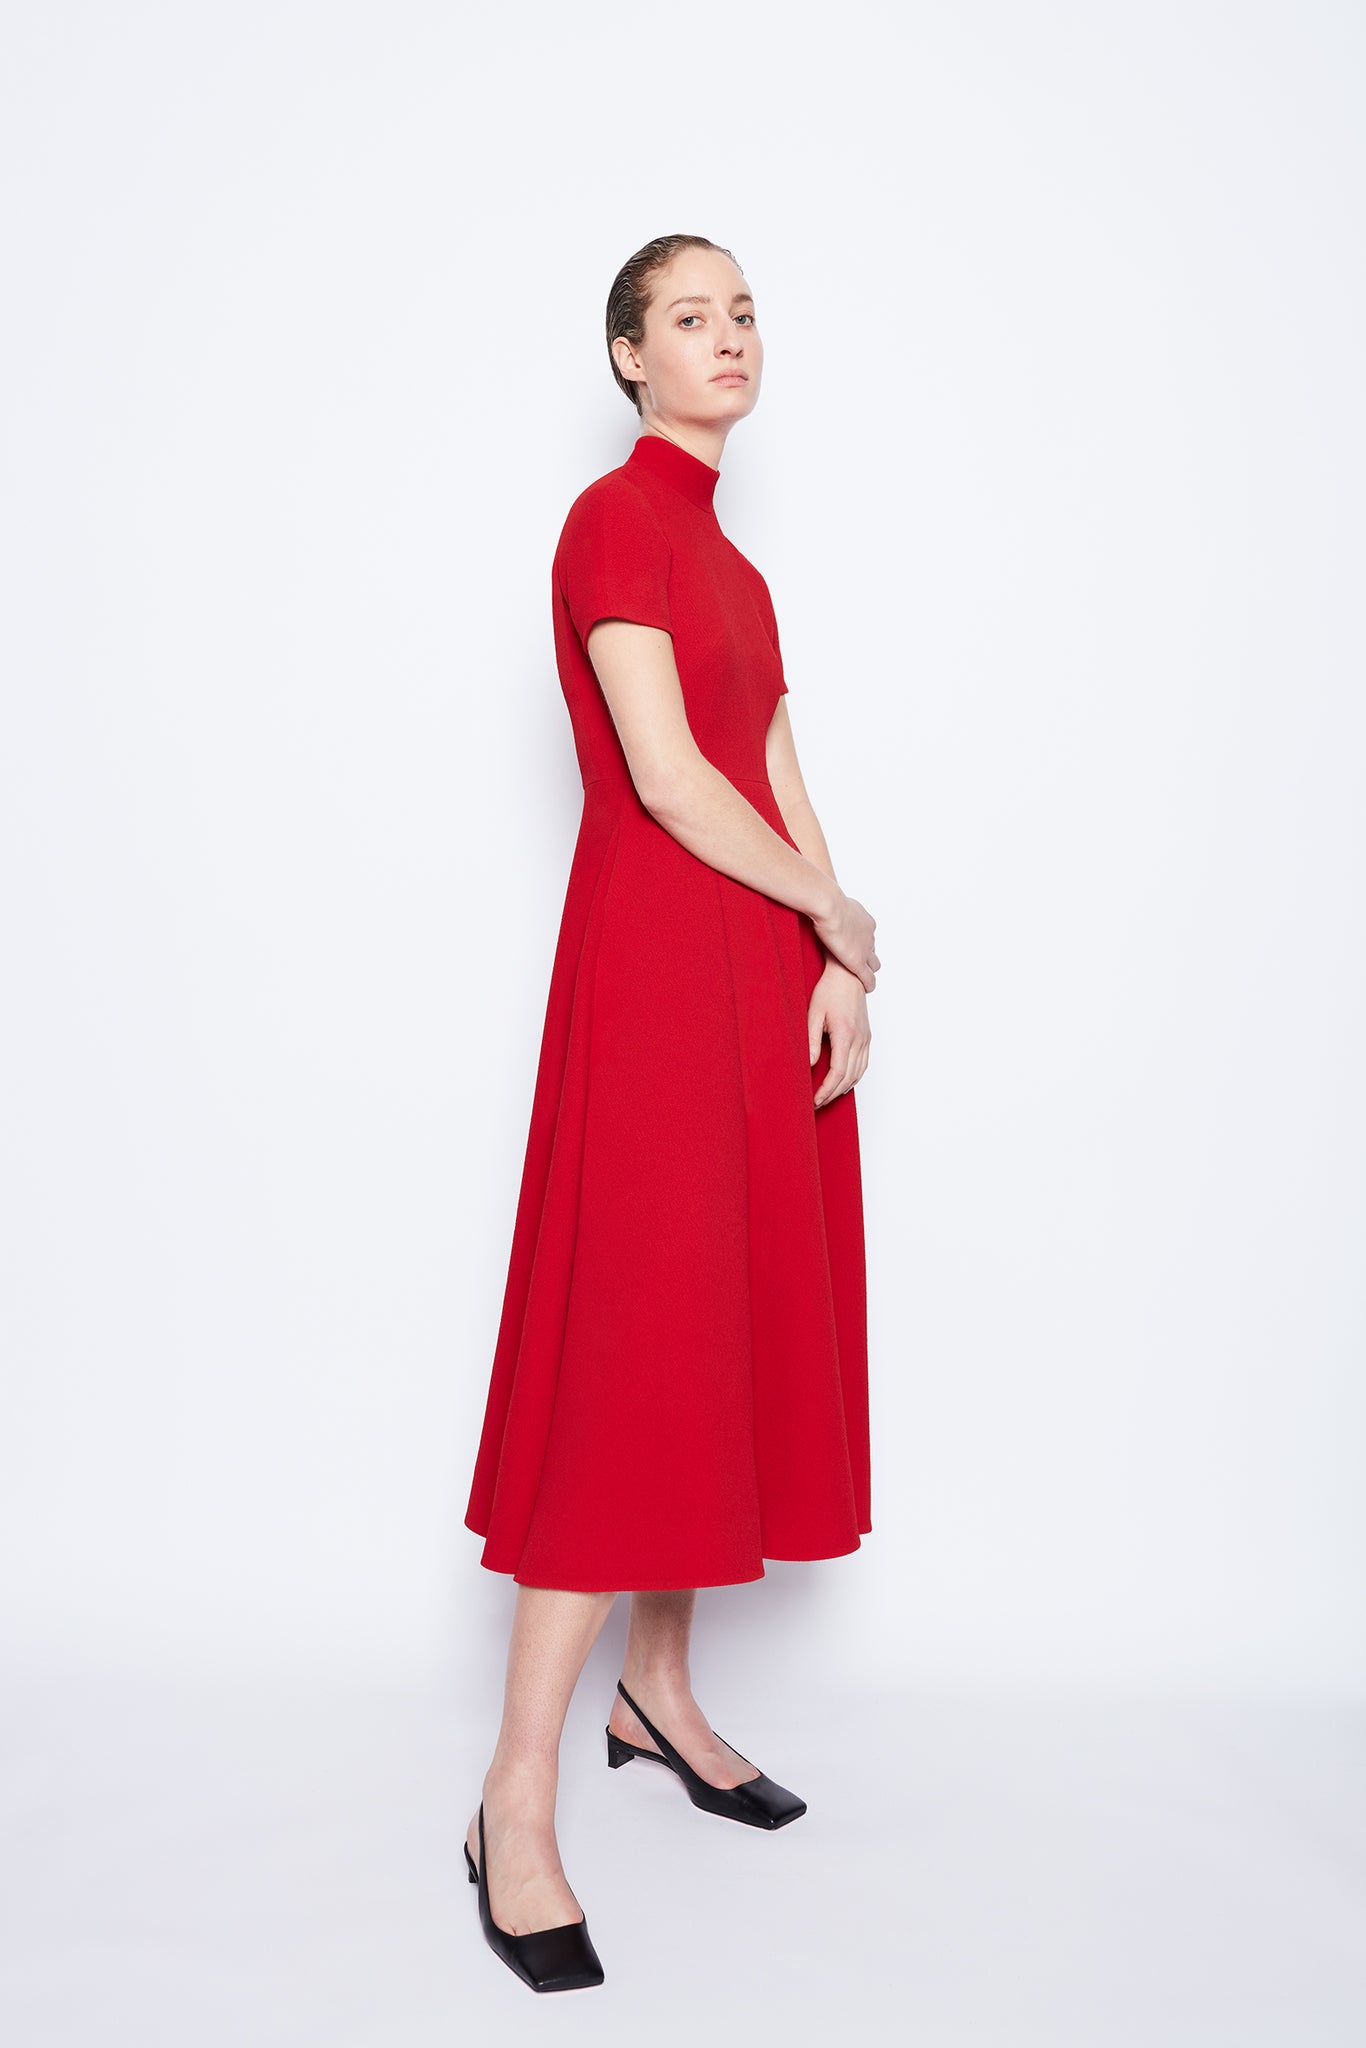 Camilla Dress | Red Crepe High Neck Short Sleeve Dress | Emilia Wickstead